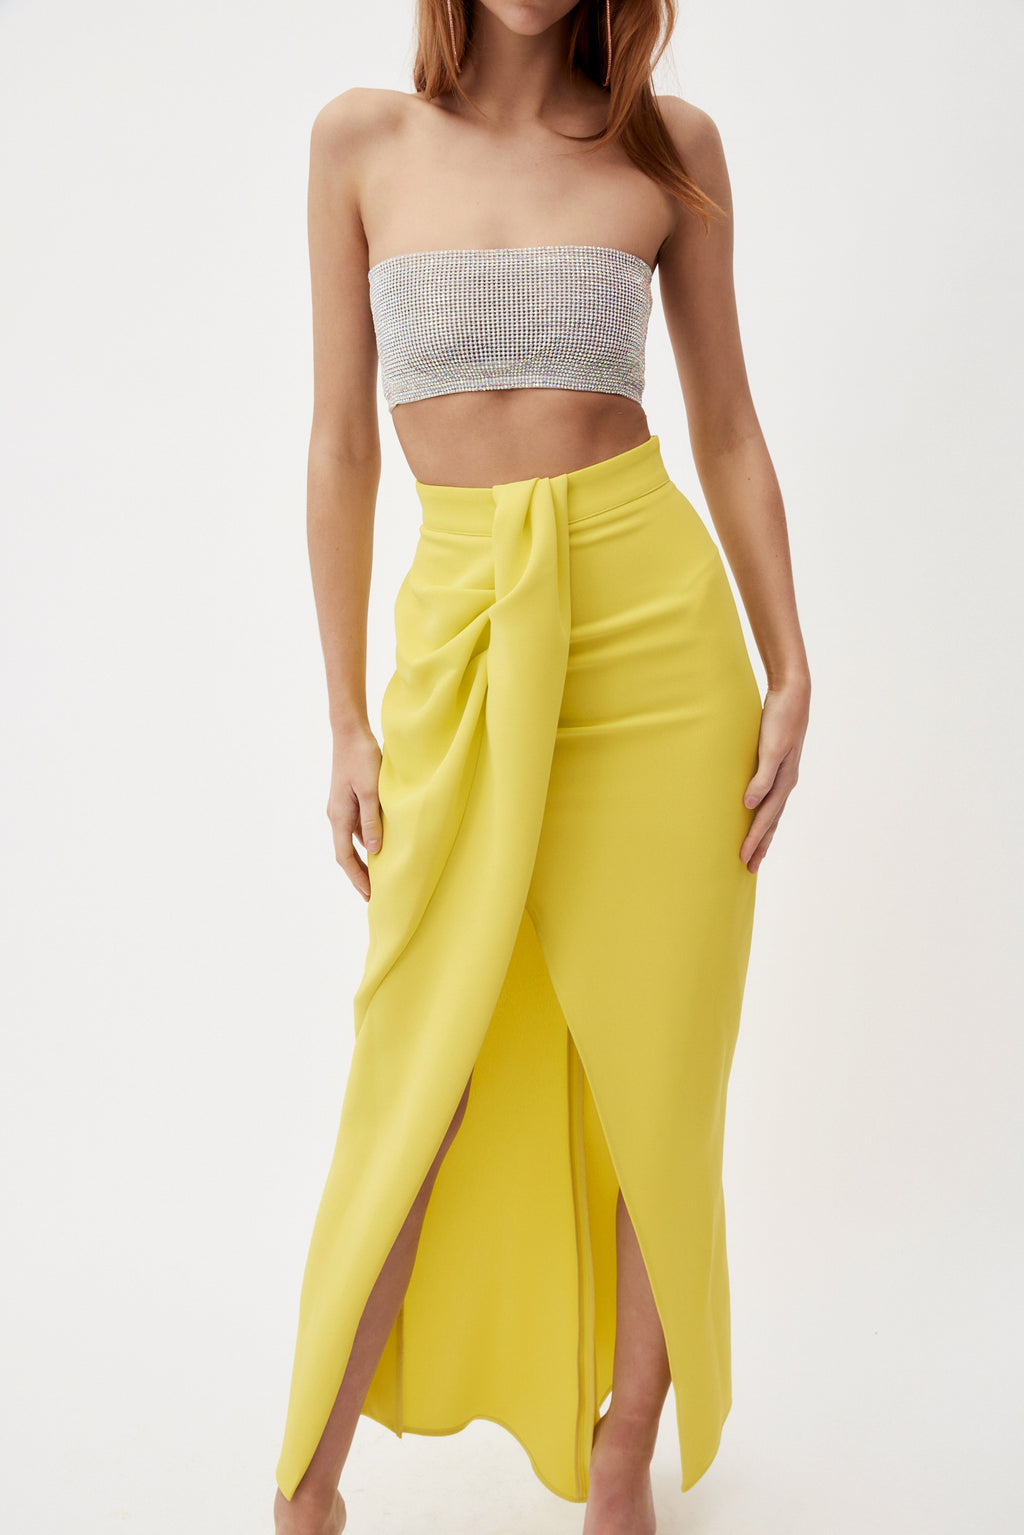 Filmic Citrus Skirt